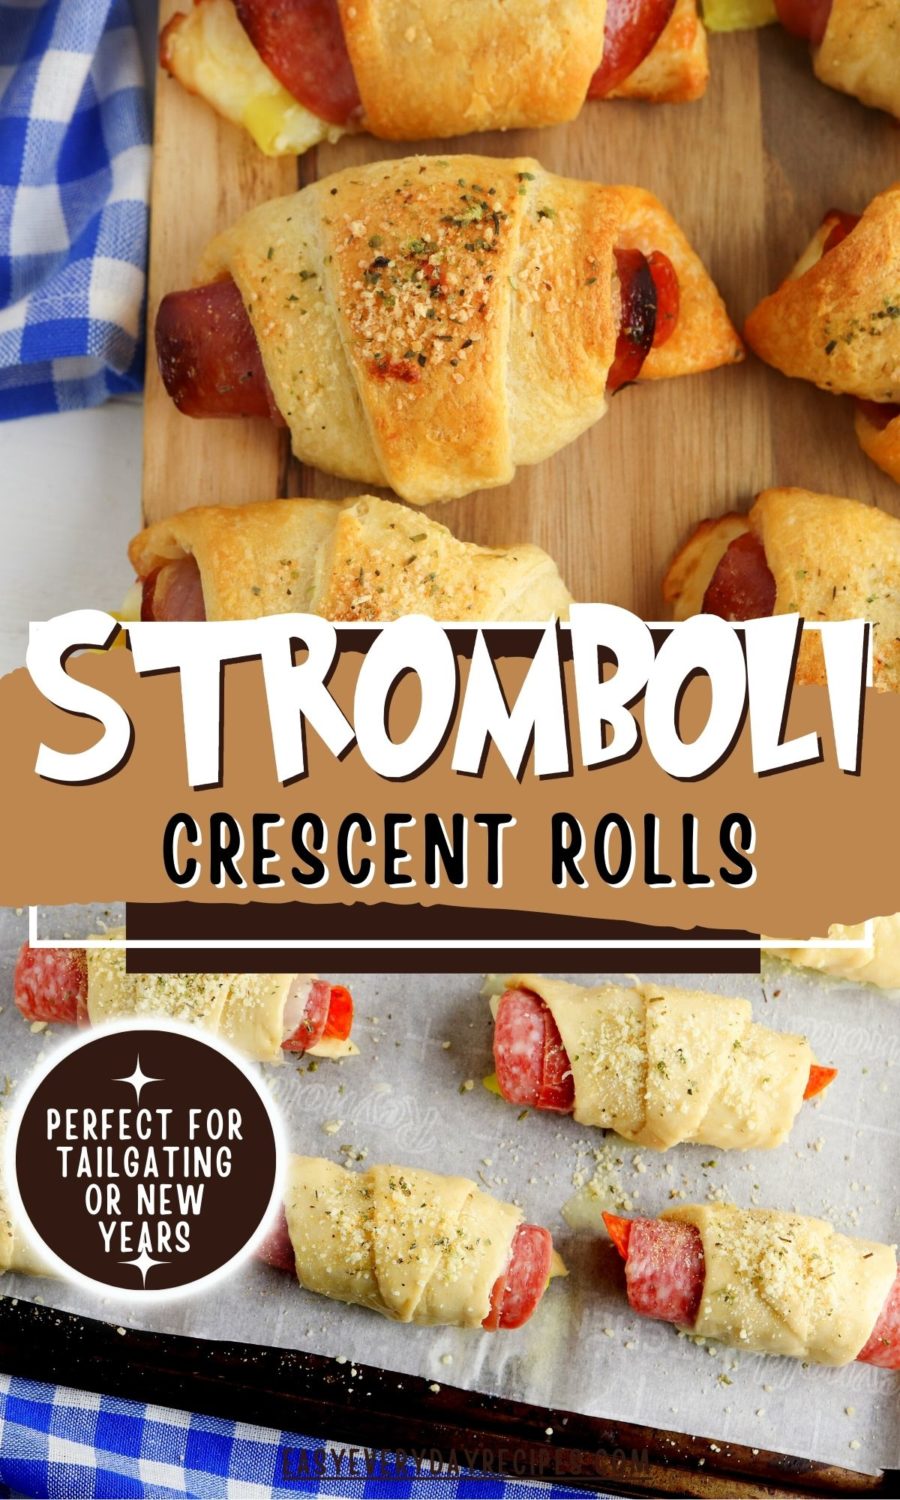 Stromboli crescent rolls on a baking sheet.